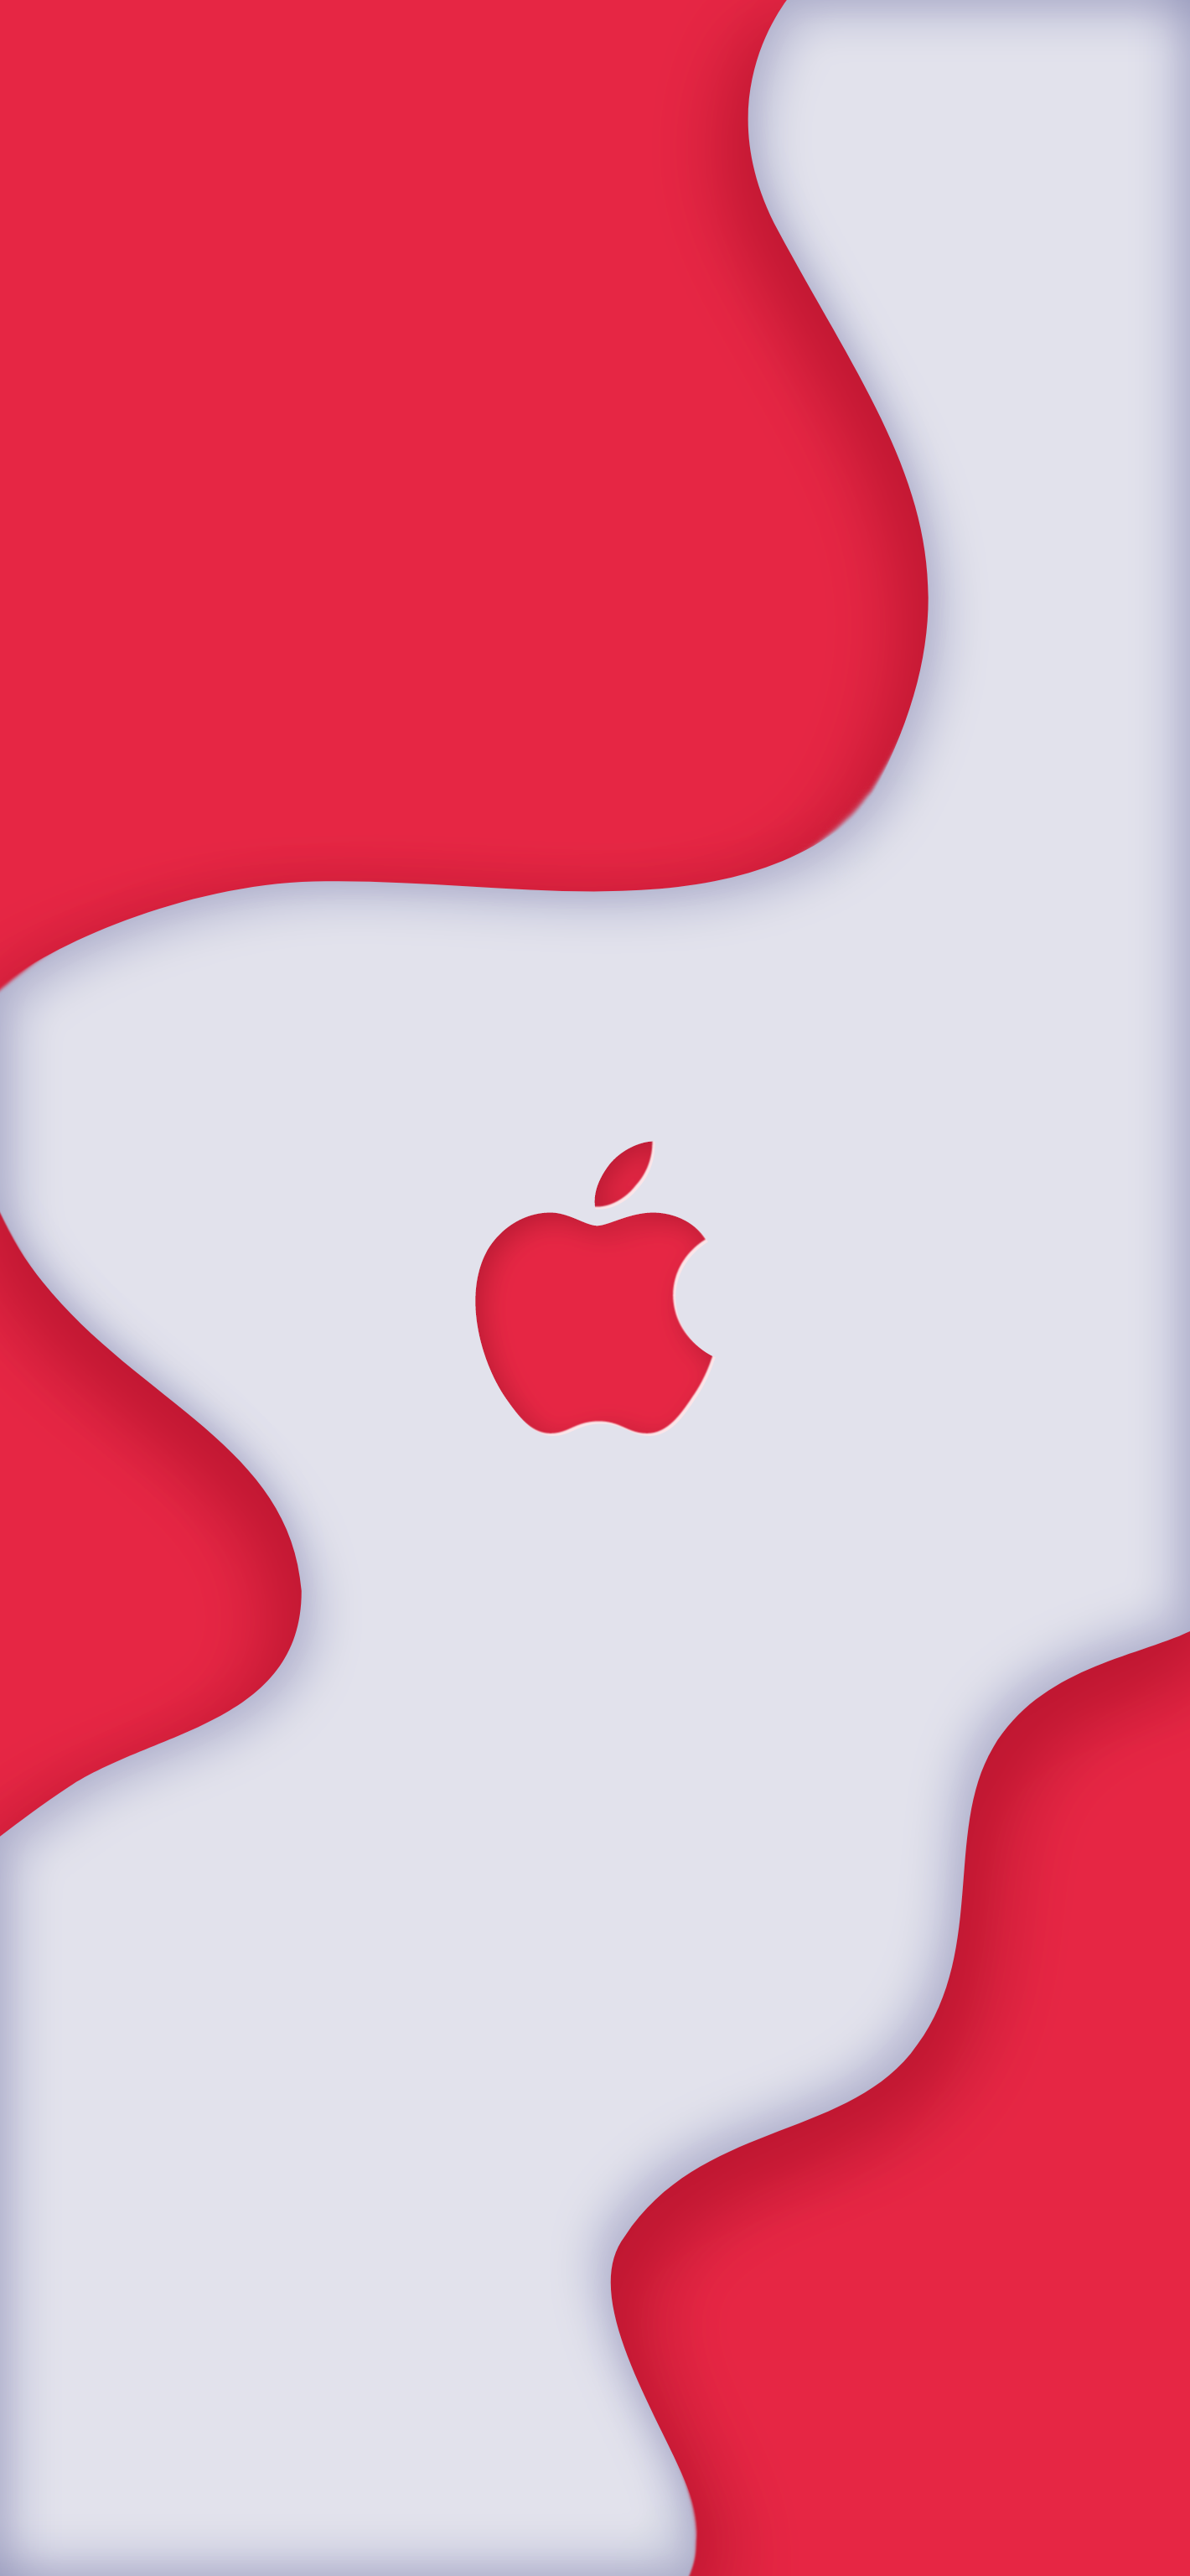 neumorphism iphone wallpaper ispazio idownloadblog red iPhone logo